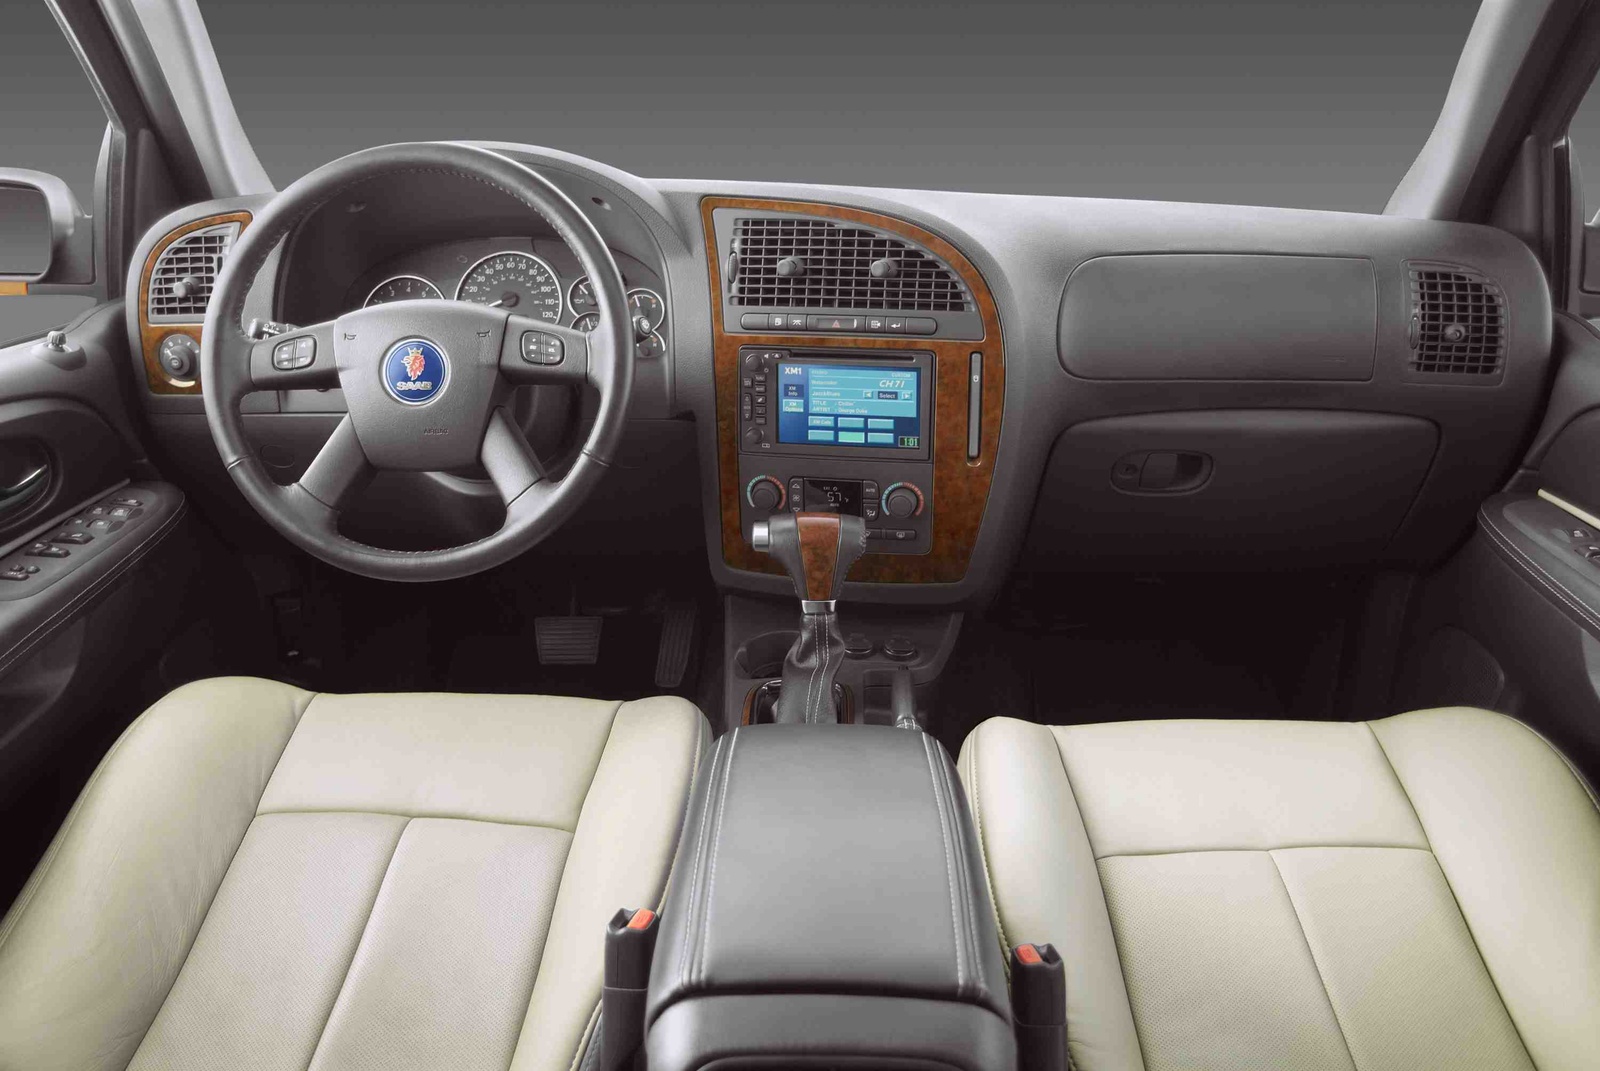 2009 Saab 9-7X - Pictures - Interior Front View - CarGurus